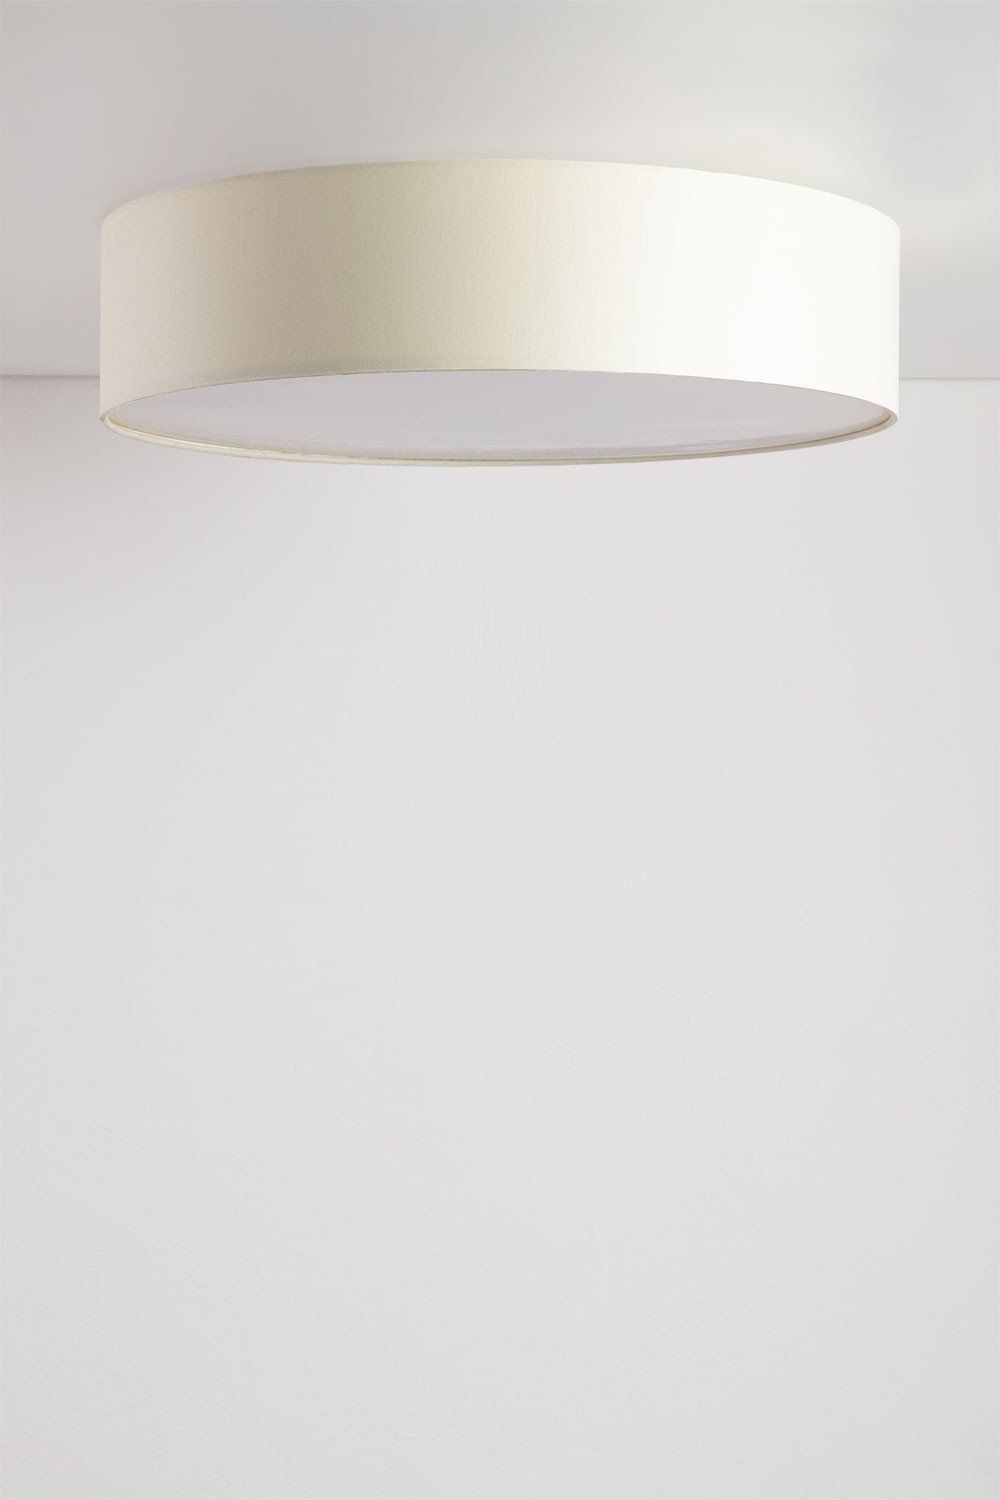 Stoffen plafondlamp Godric Ø50 cm, galerij beeld 1